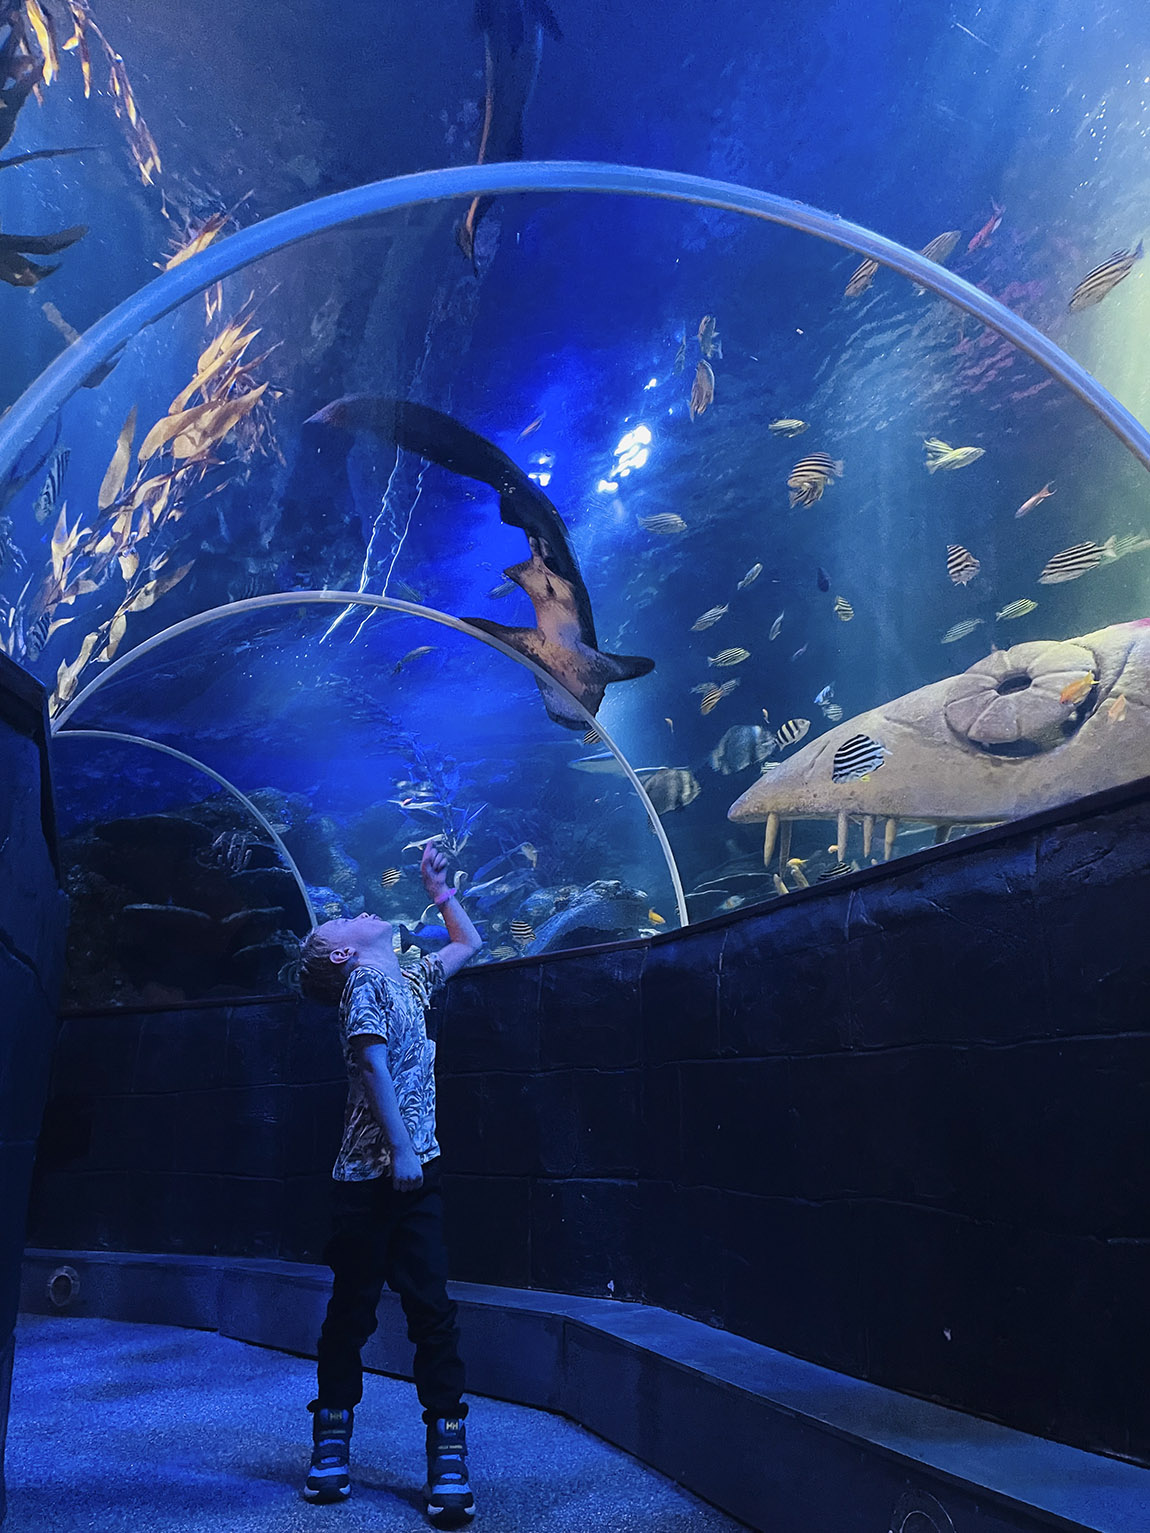 SeaLife Helsinki transports you into an amazing underwater world